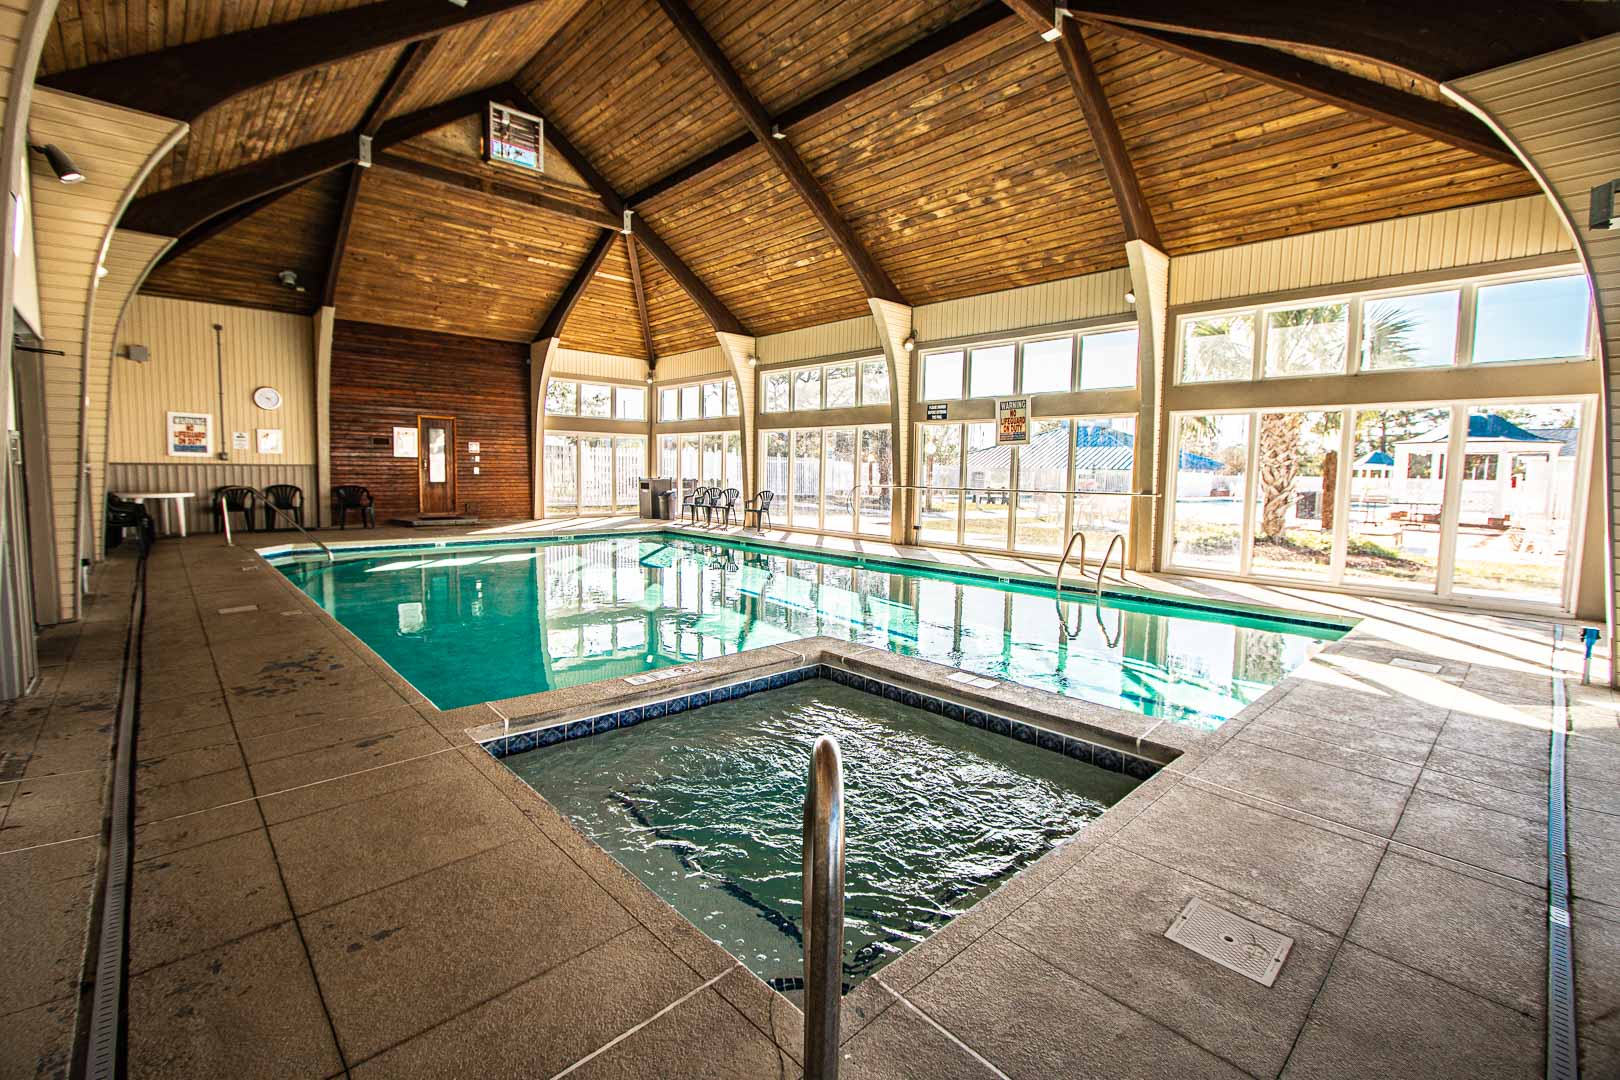 A quaint indoor swimming pool at VRI's Sandcastle Cove in New Bern, North Carolina.